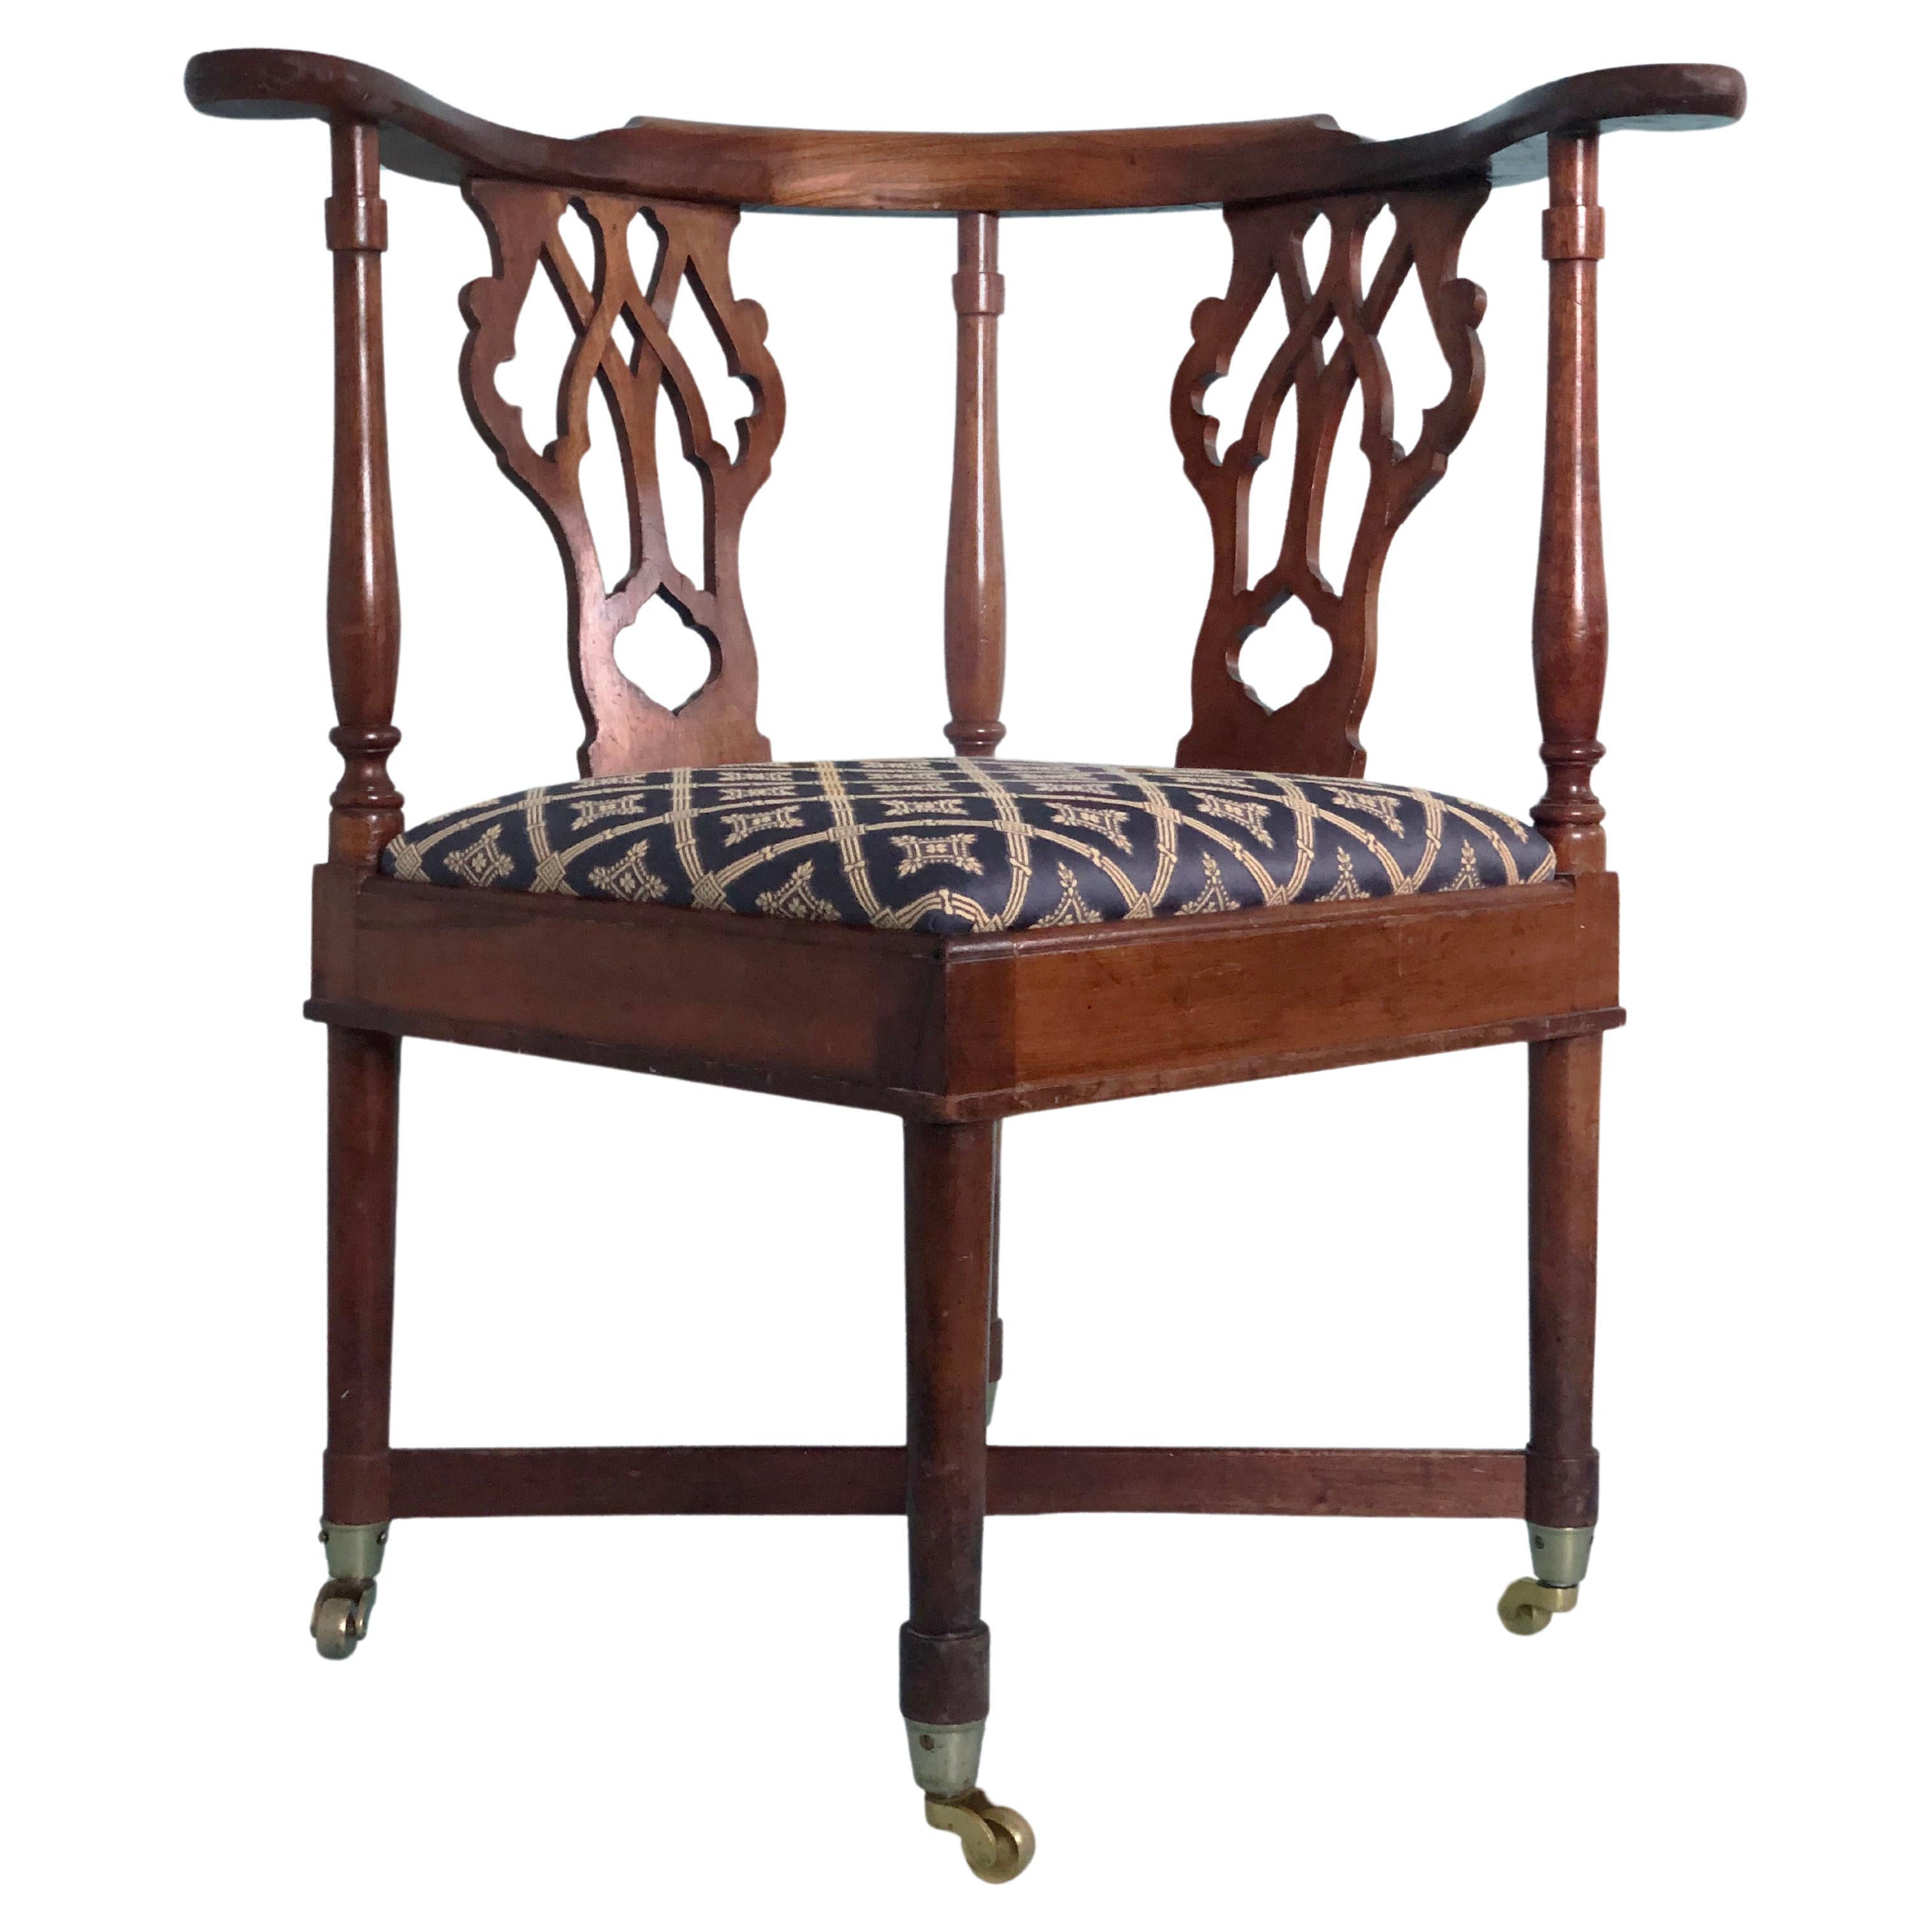 Georgian Mahogany Corner Chair on Wheels 19th Century For Sale